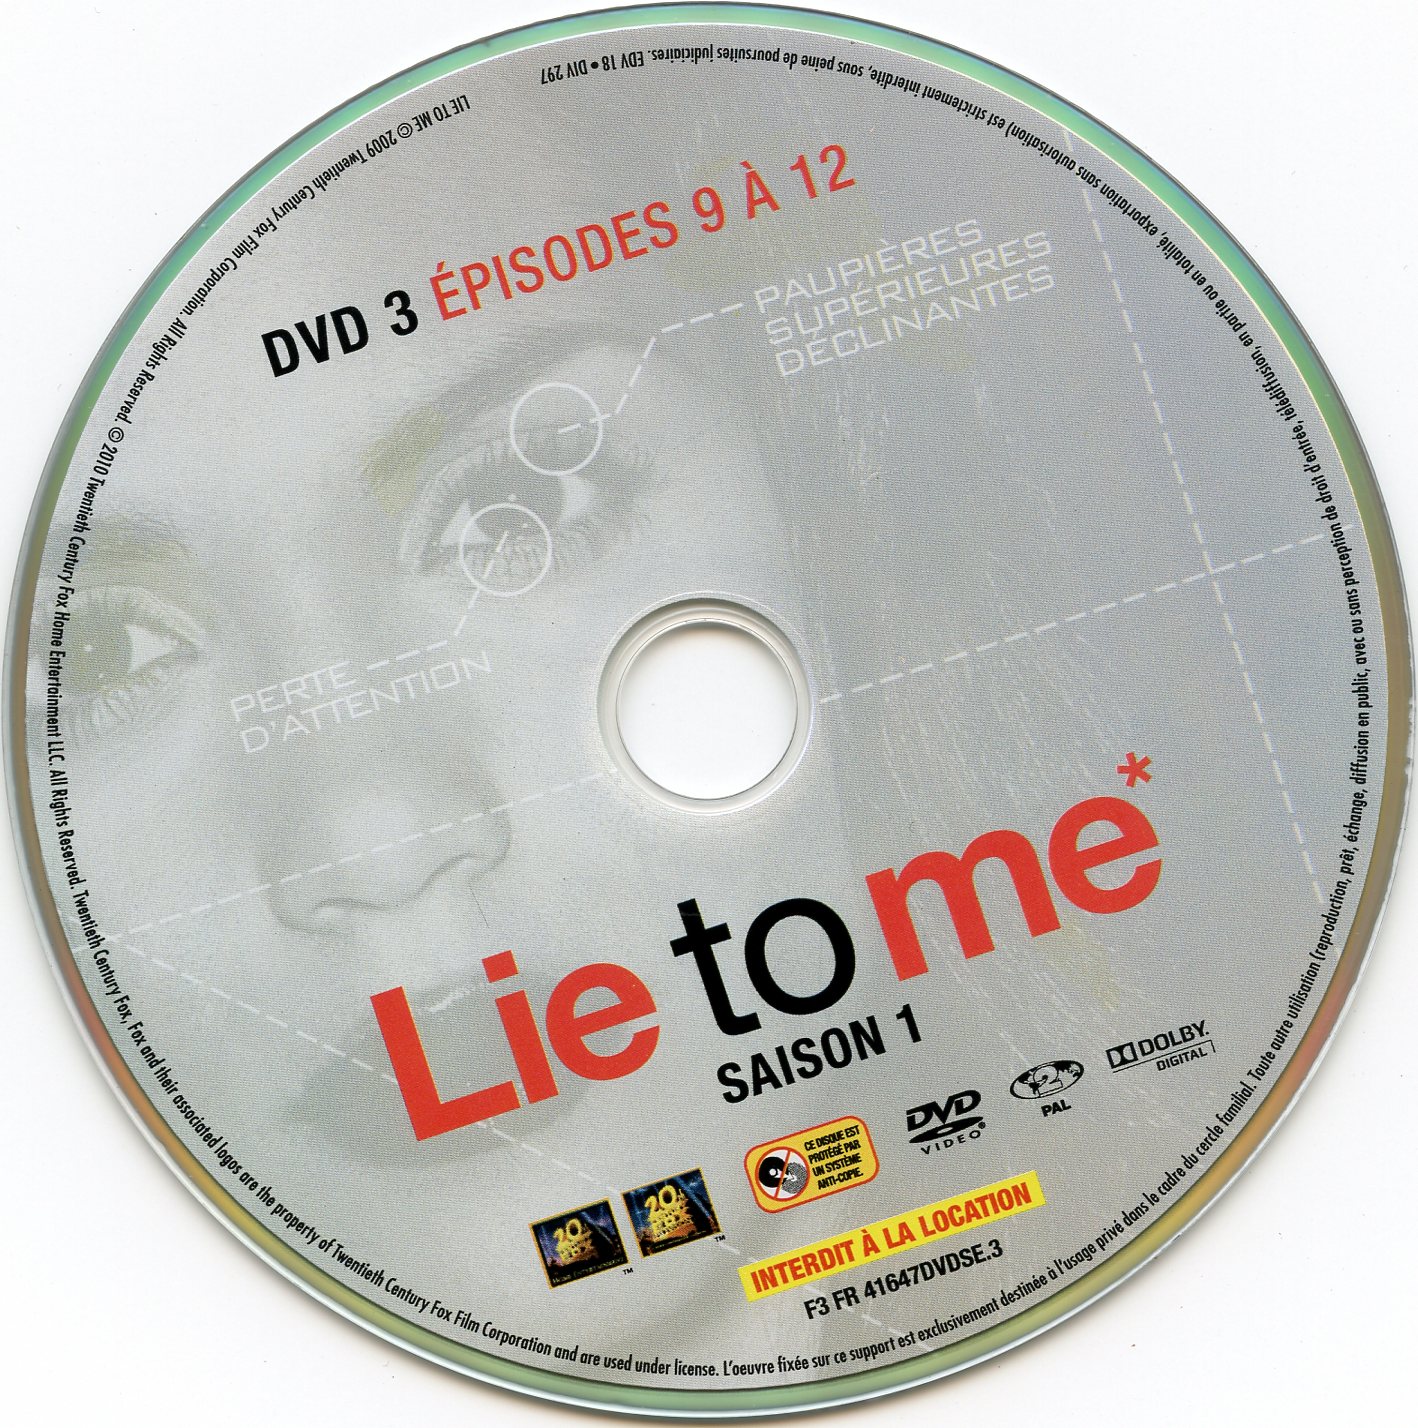 Lie to me Saison 1 DVD 3